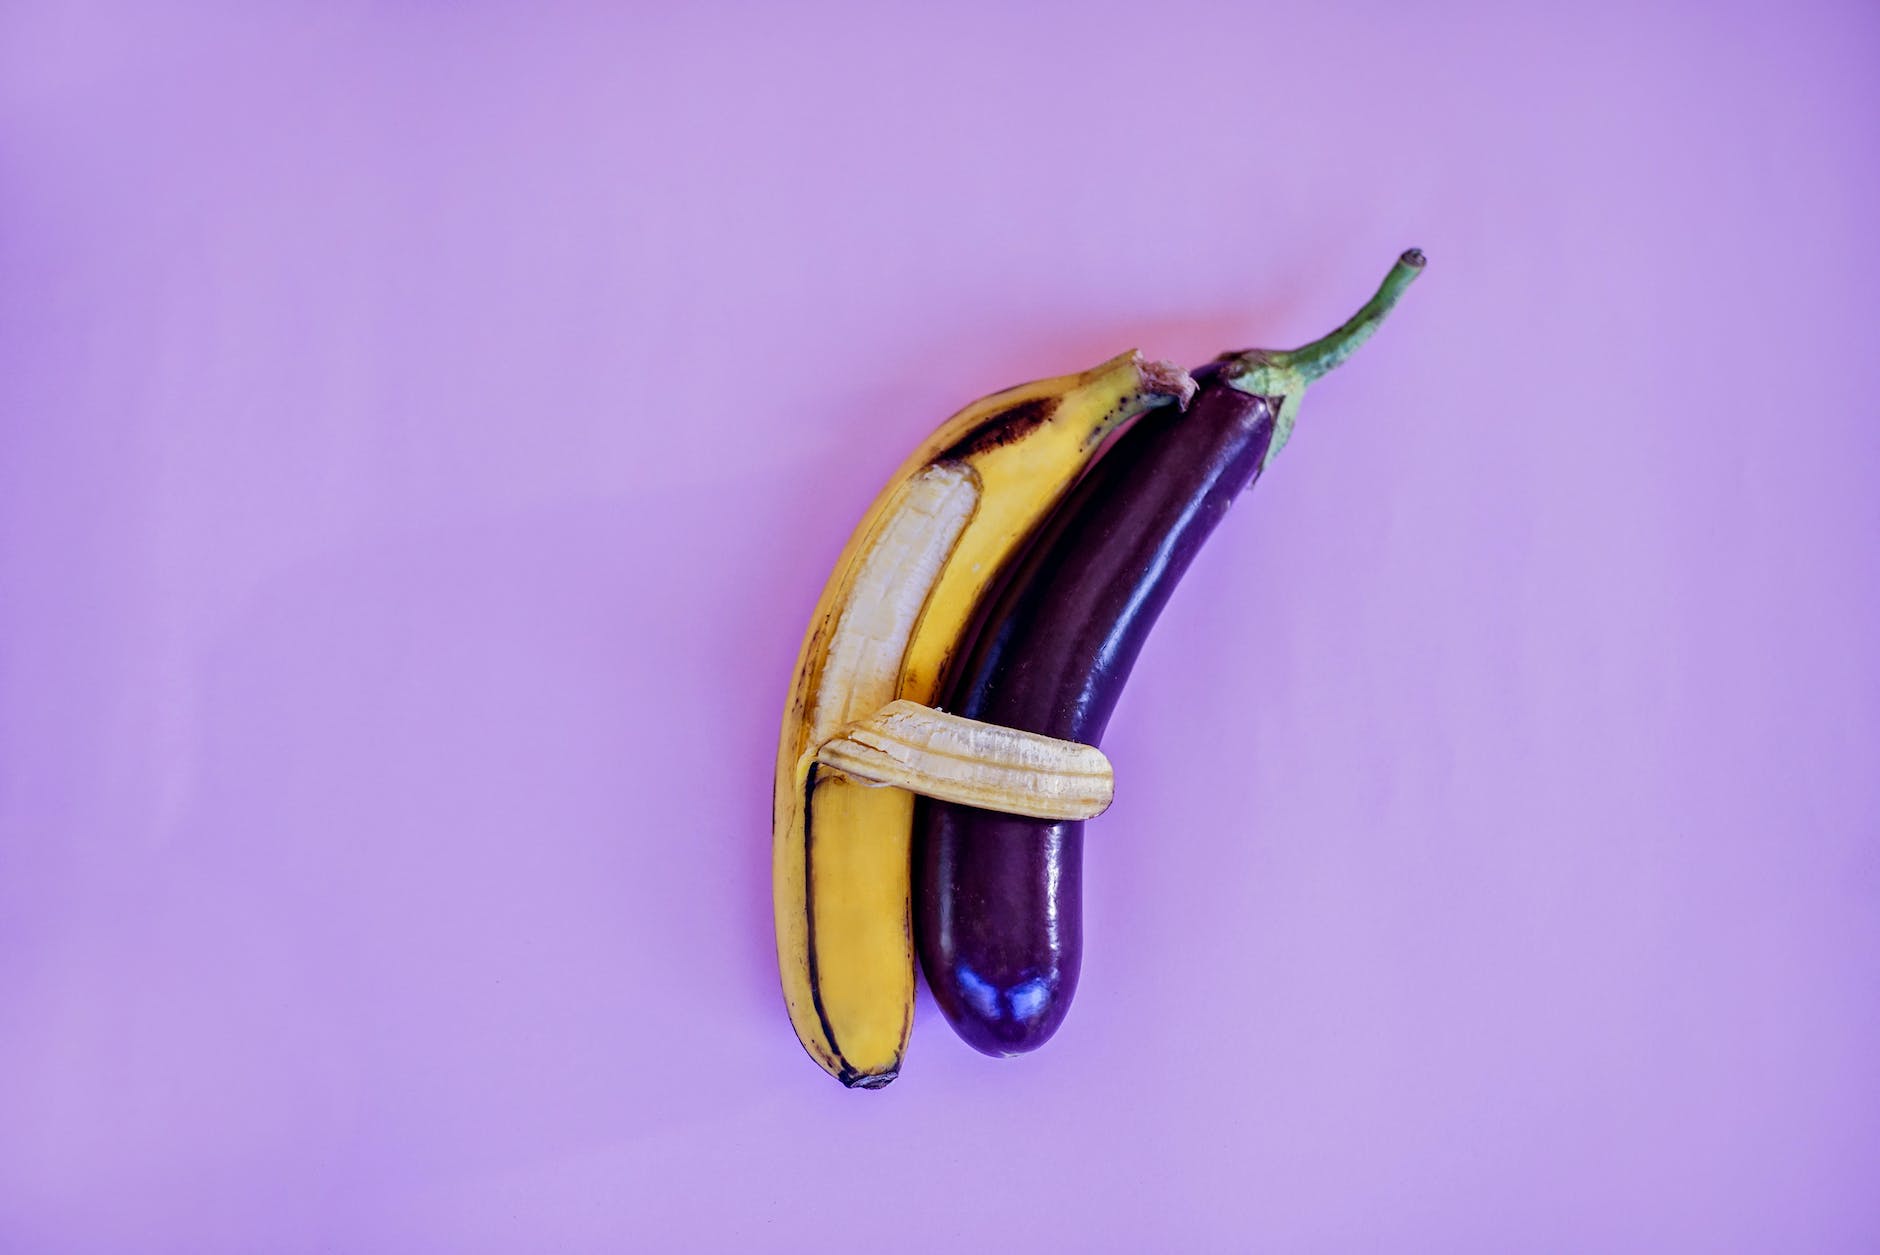 banana and eggplant on violet surface